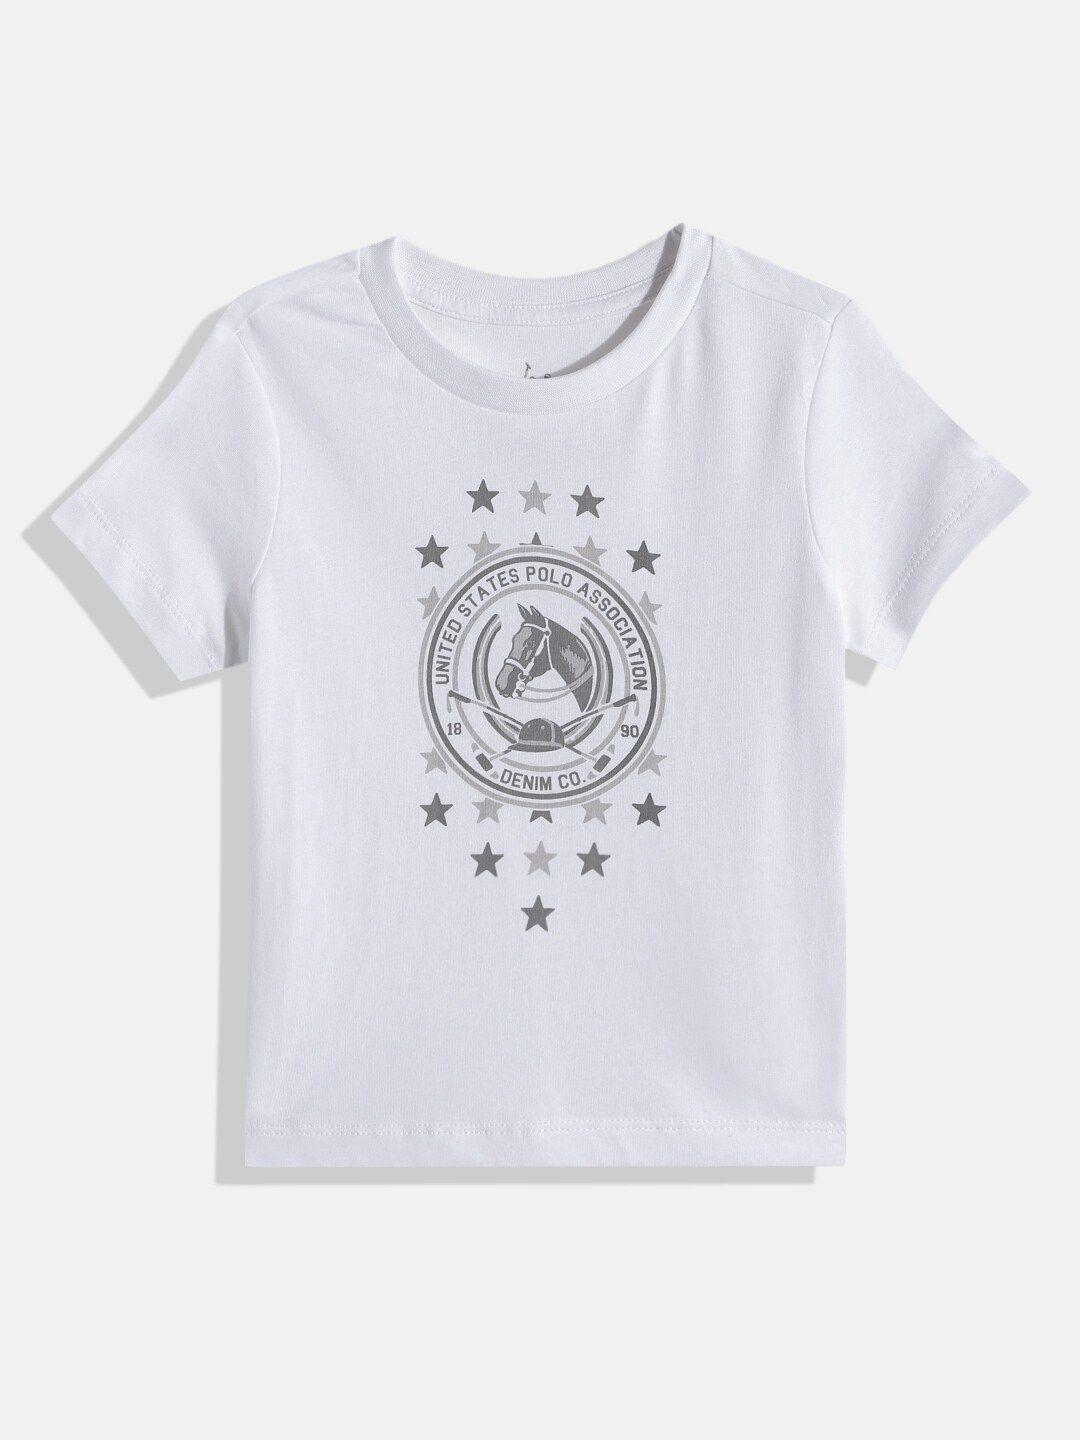 u.s. polo assn. kids boys white brand logo printed pure cotton t-shirt